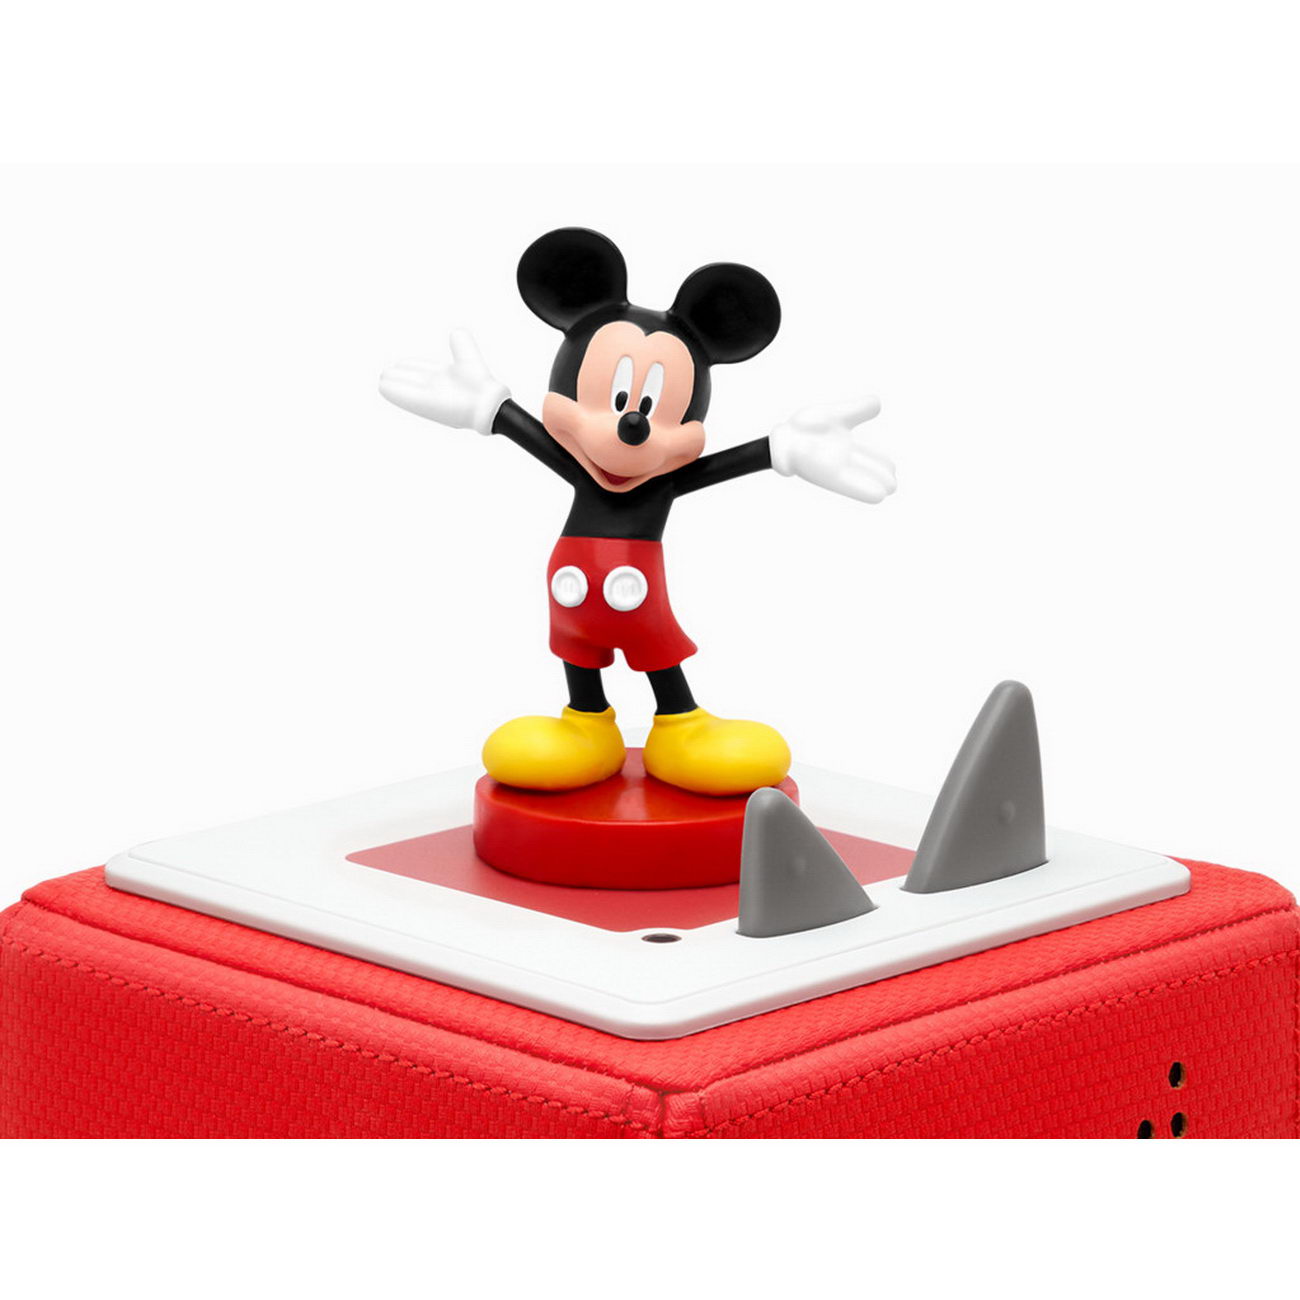 Tonies - Disney - Micky Maus Mickys total verrücktes Fußballspiel - Hörspiel